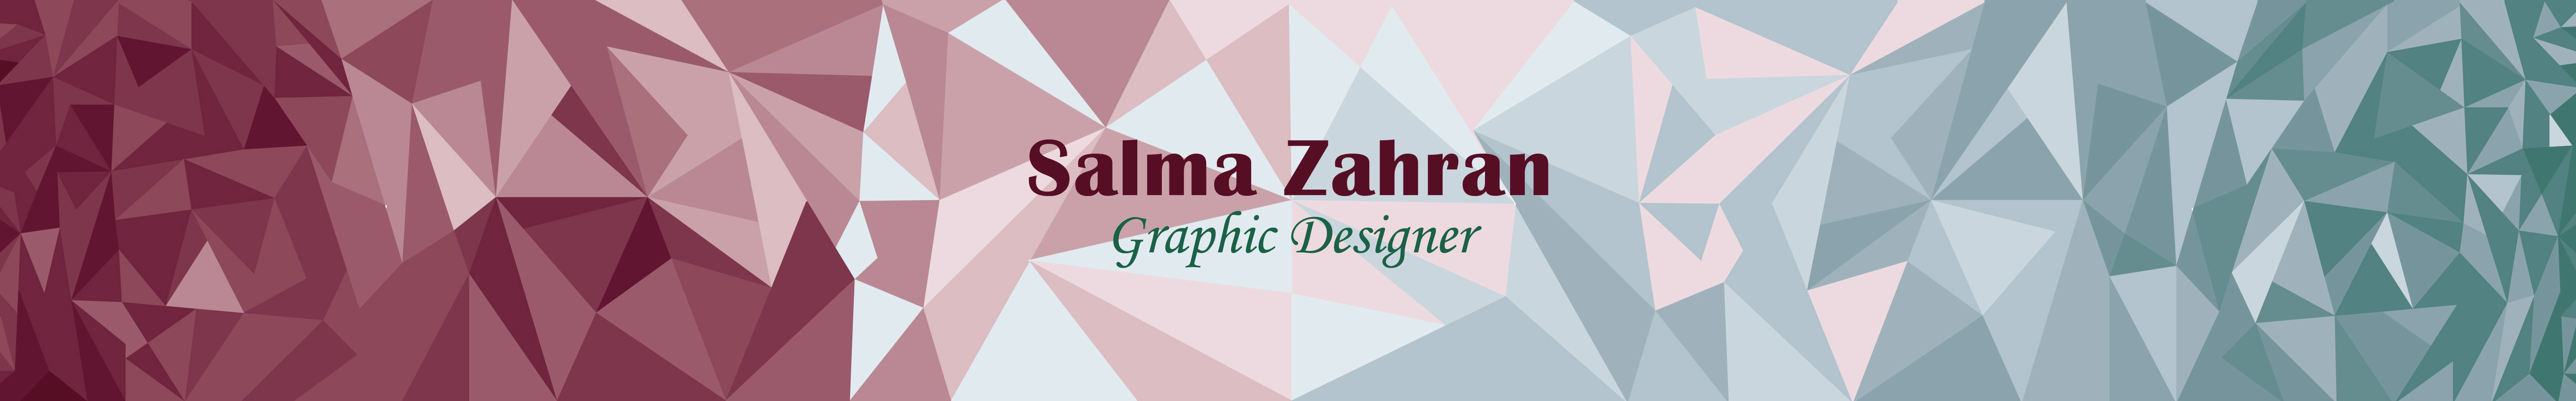 Salma Zahran's profile banner